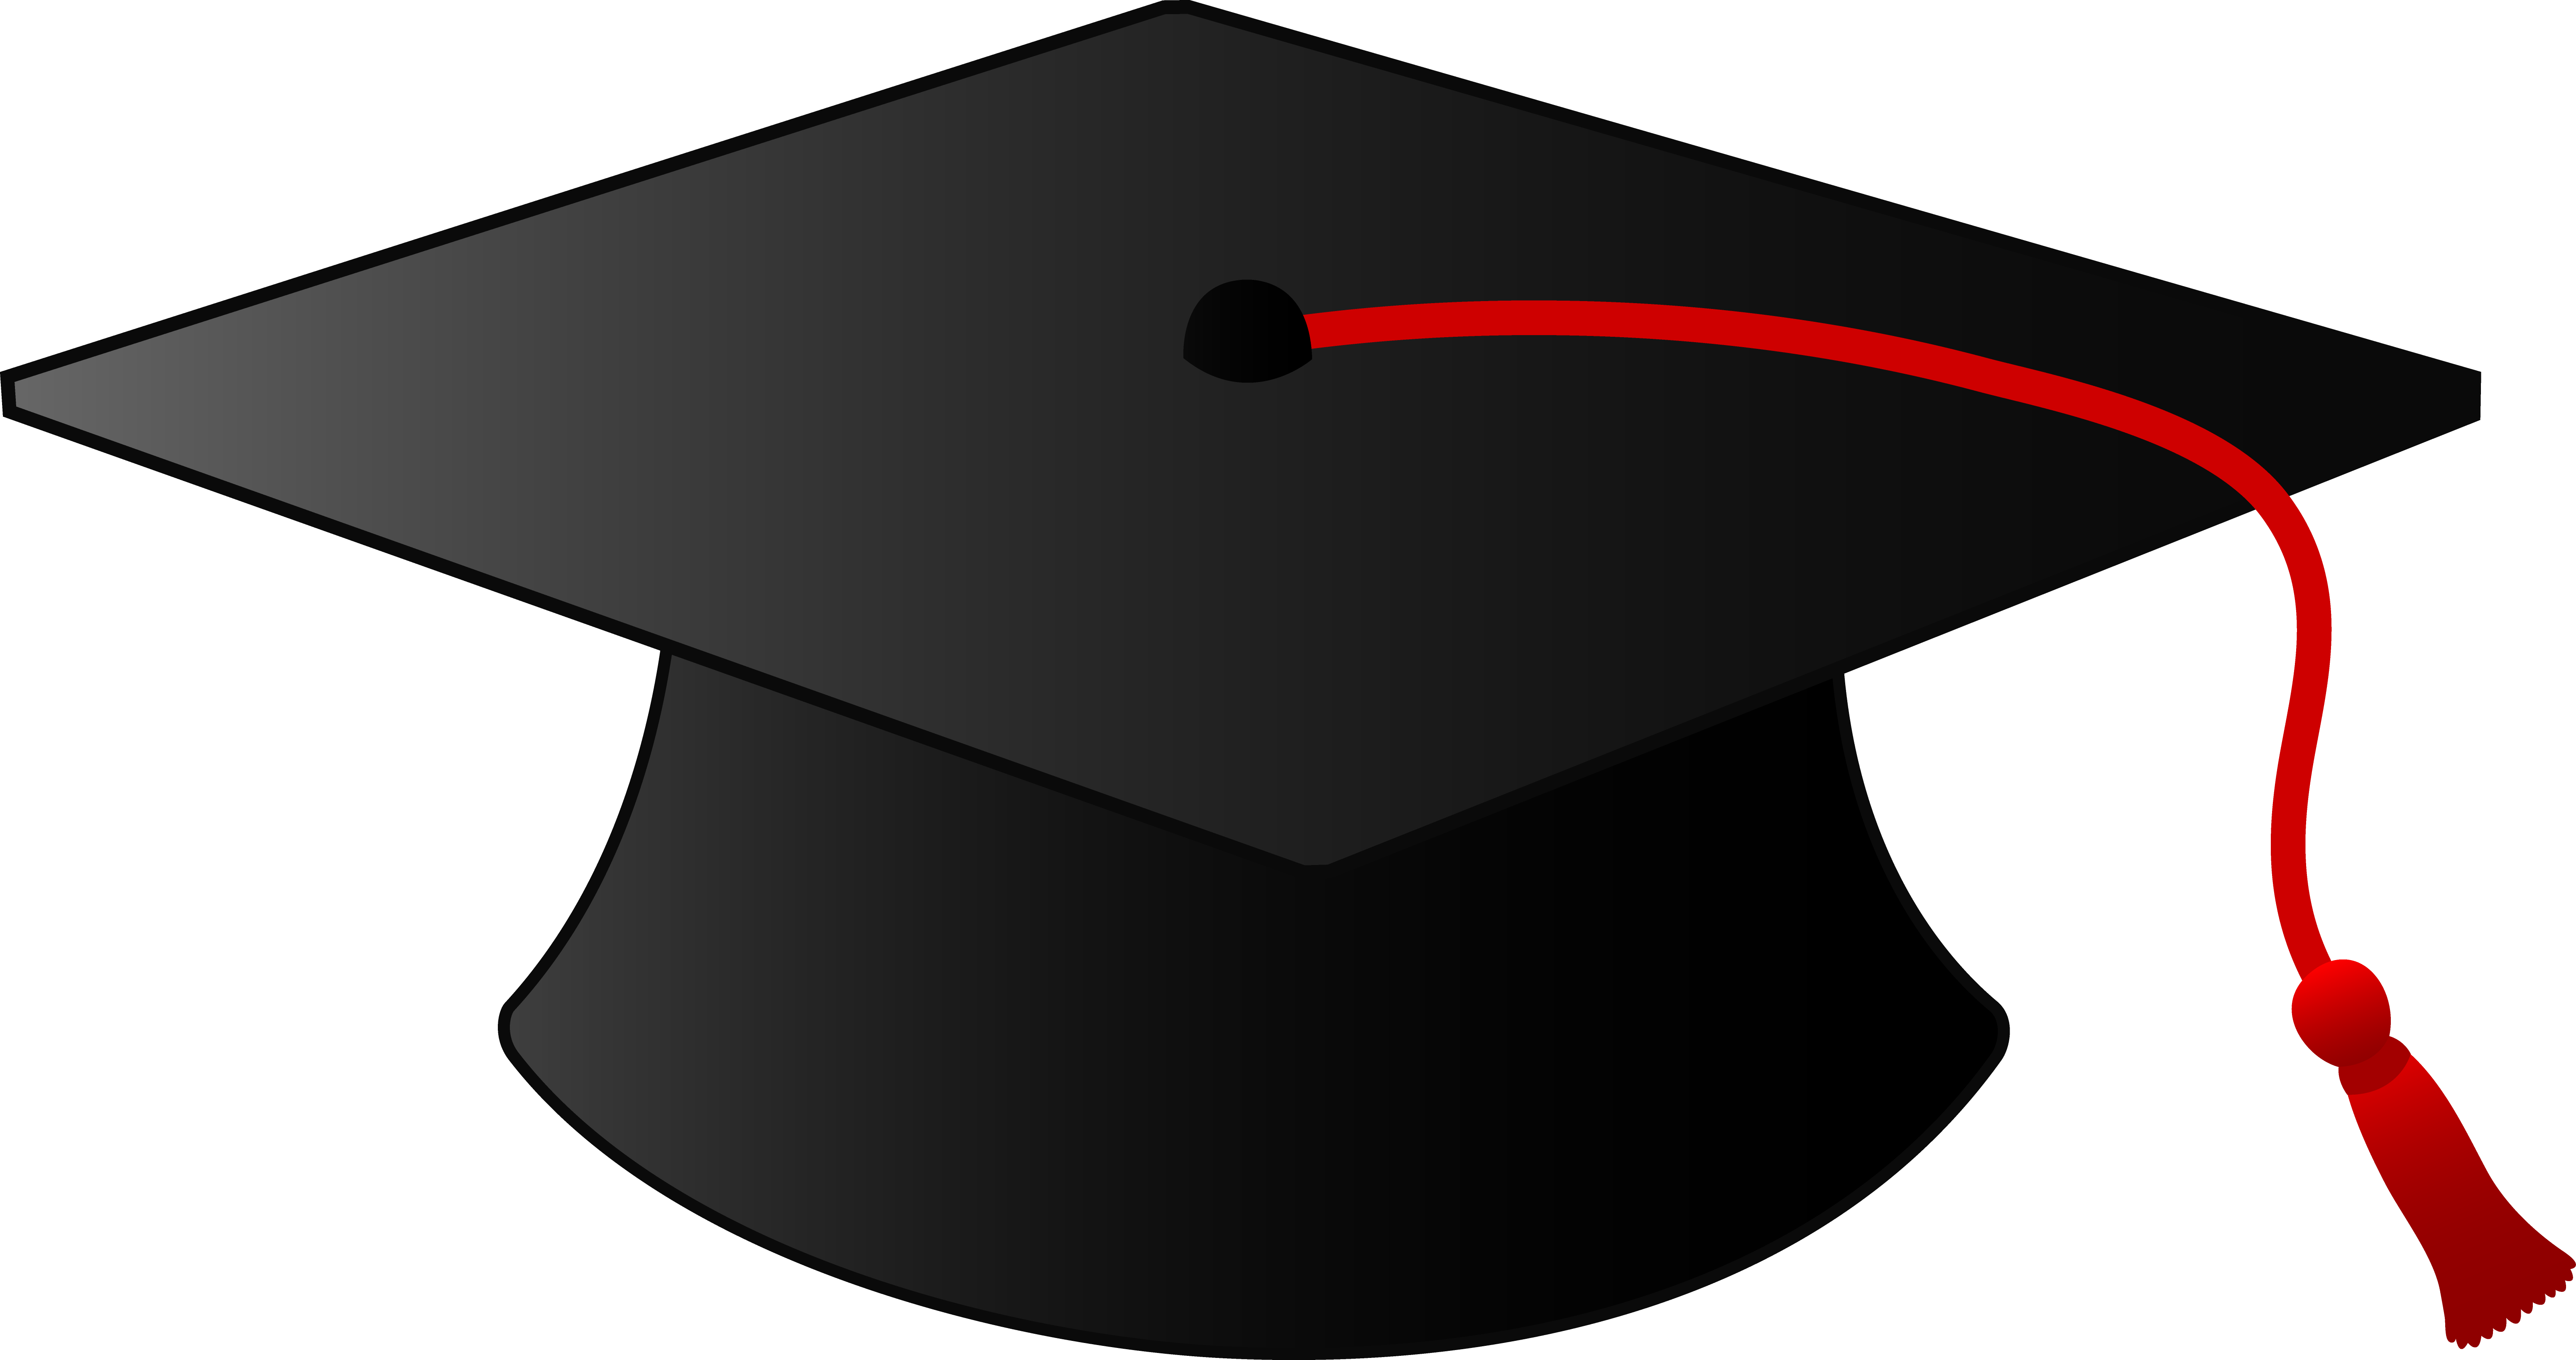 Pictures Of Graduations | Free Download Clip Art | Free Clip Art ...